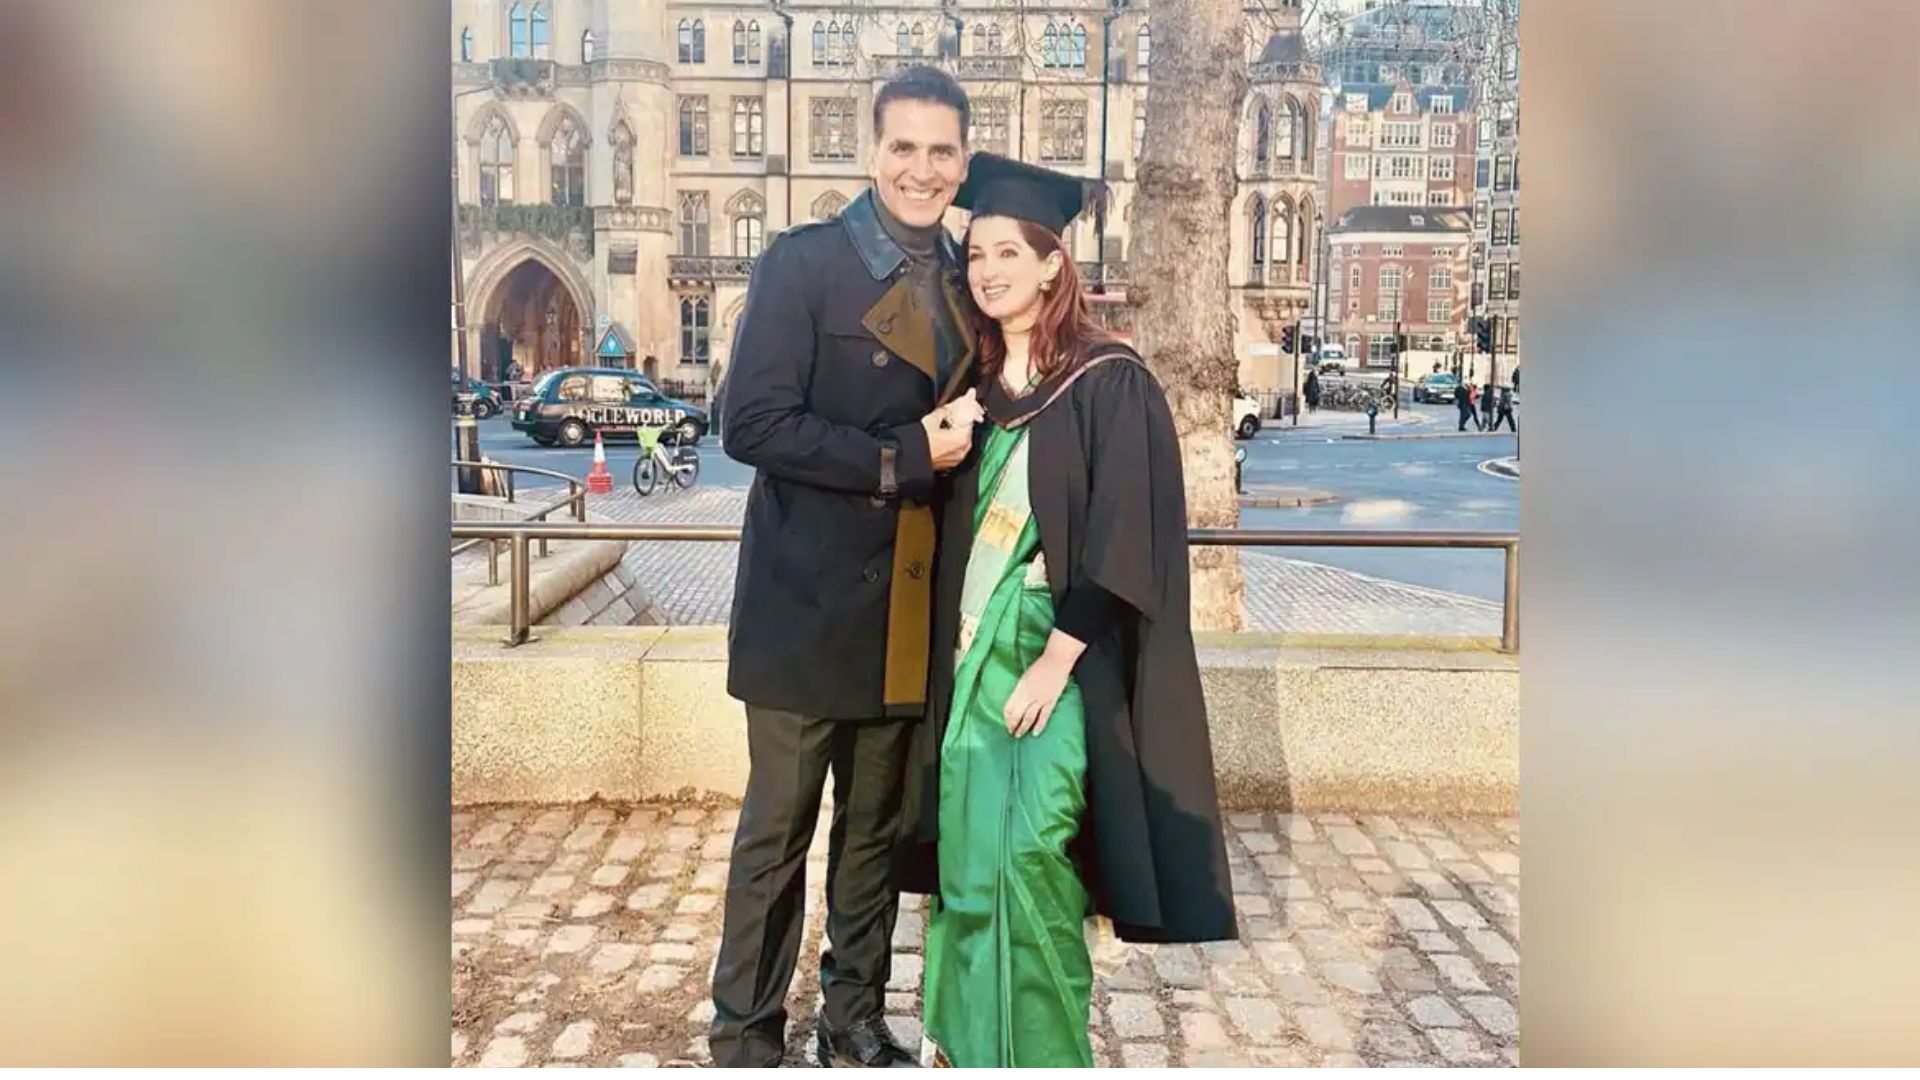 Akshay Kumar congratulates Twinkle as she graduates with Master’s degree